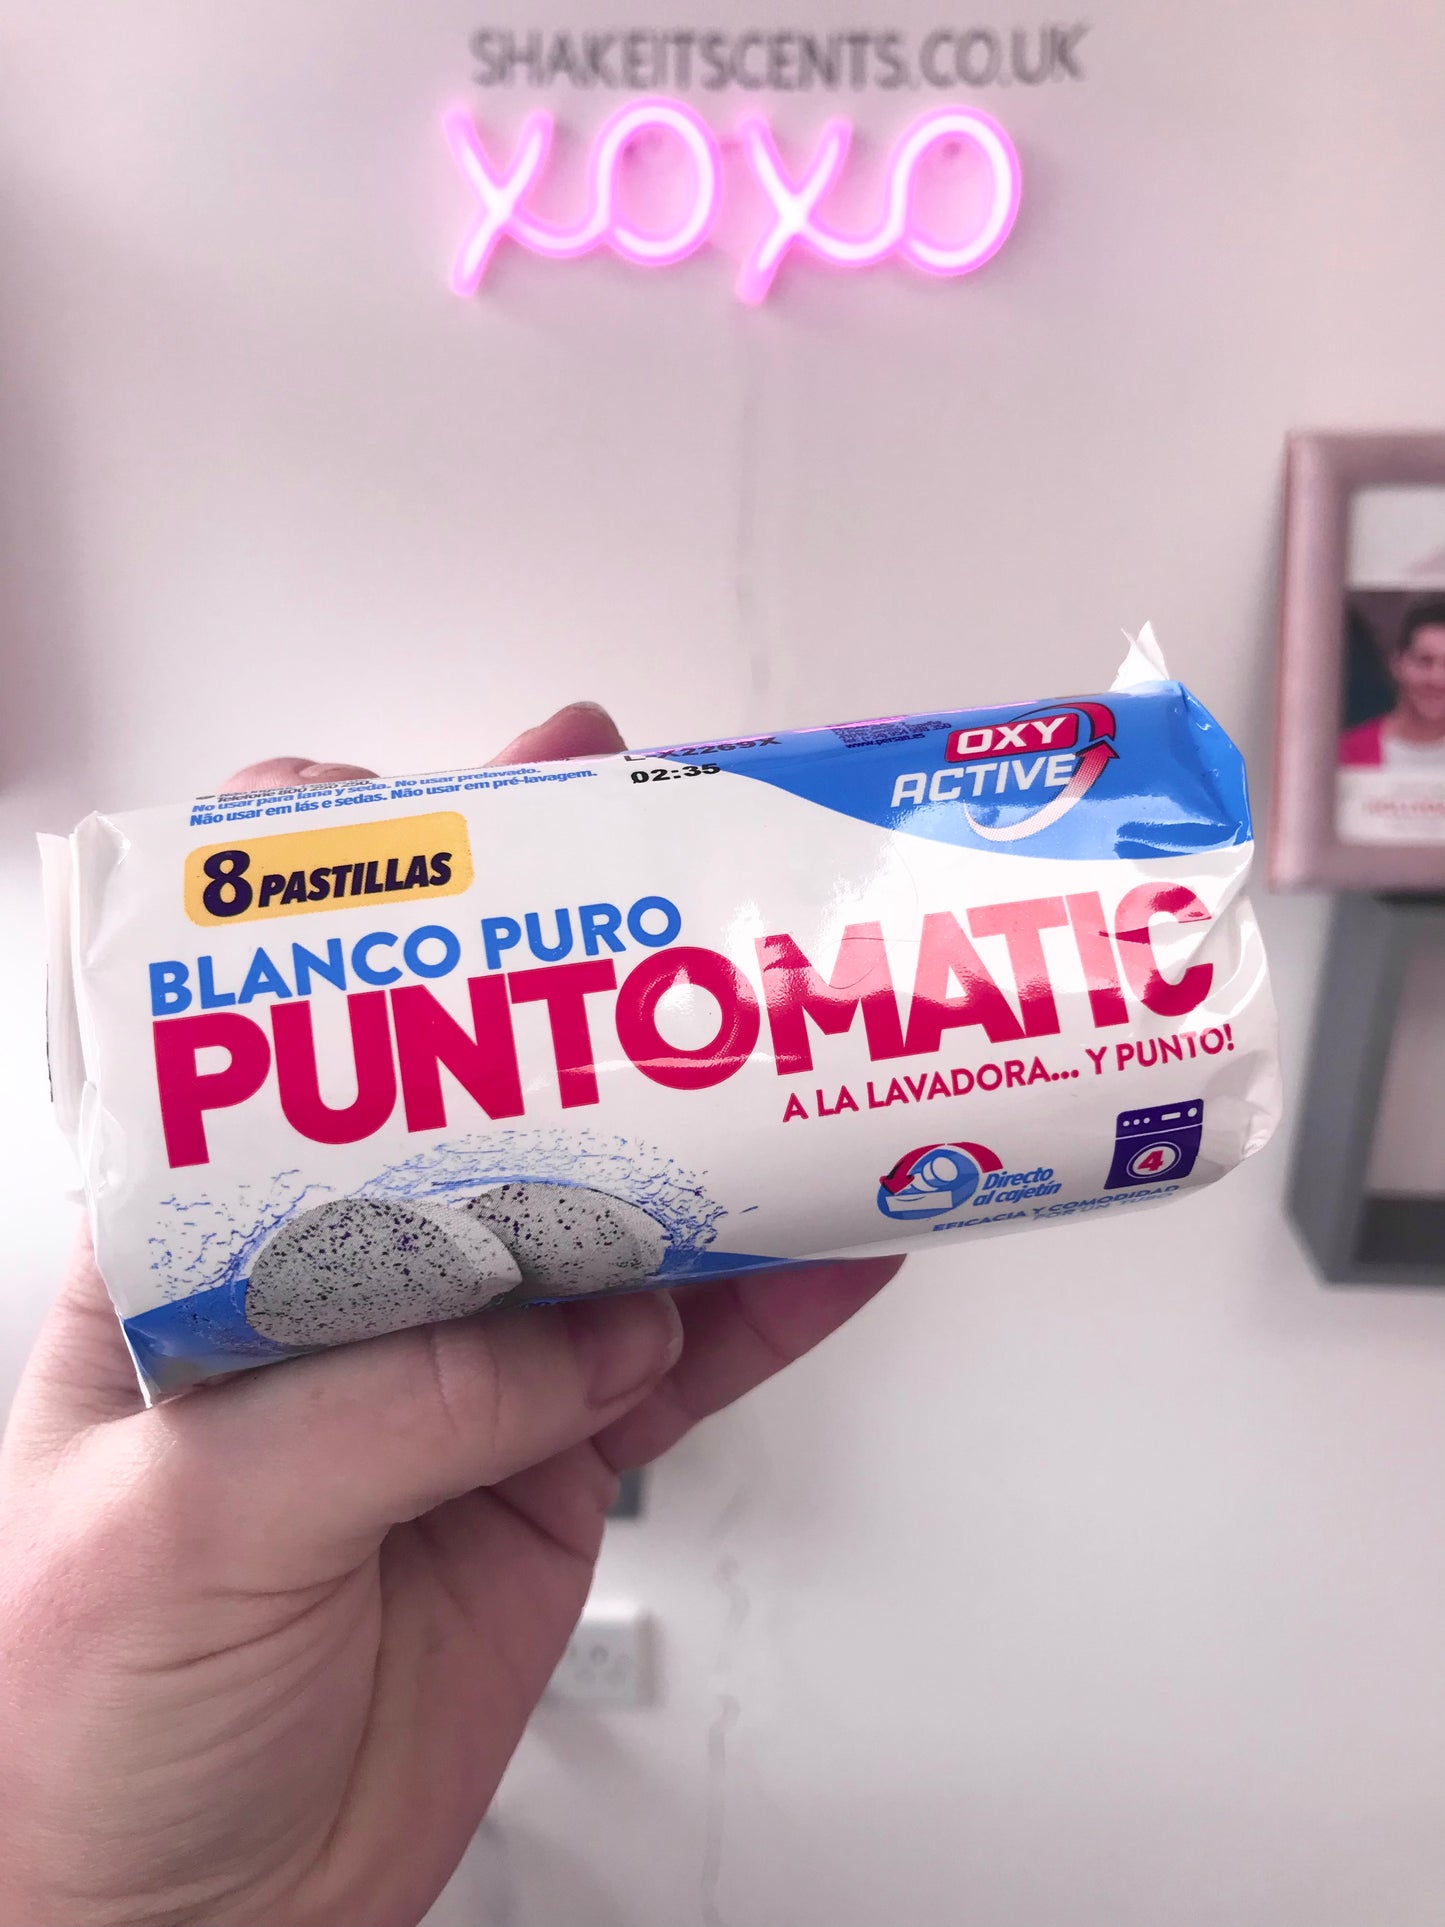 Puntomatic Spanish Wash Tablets!